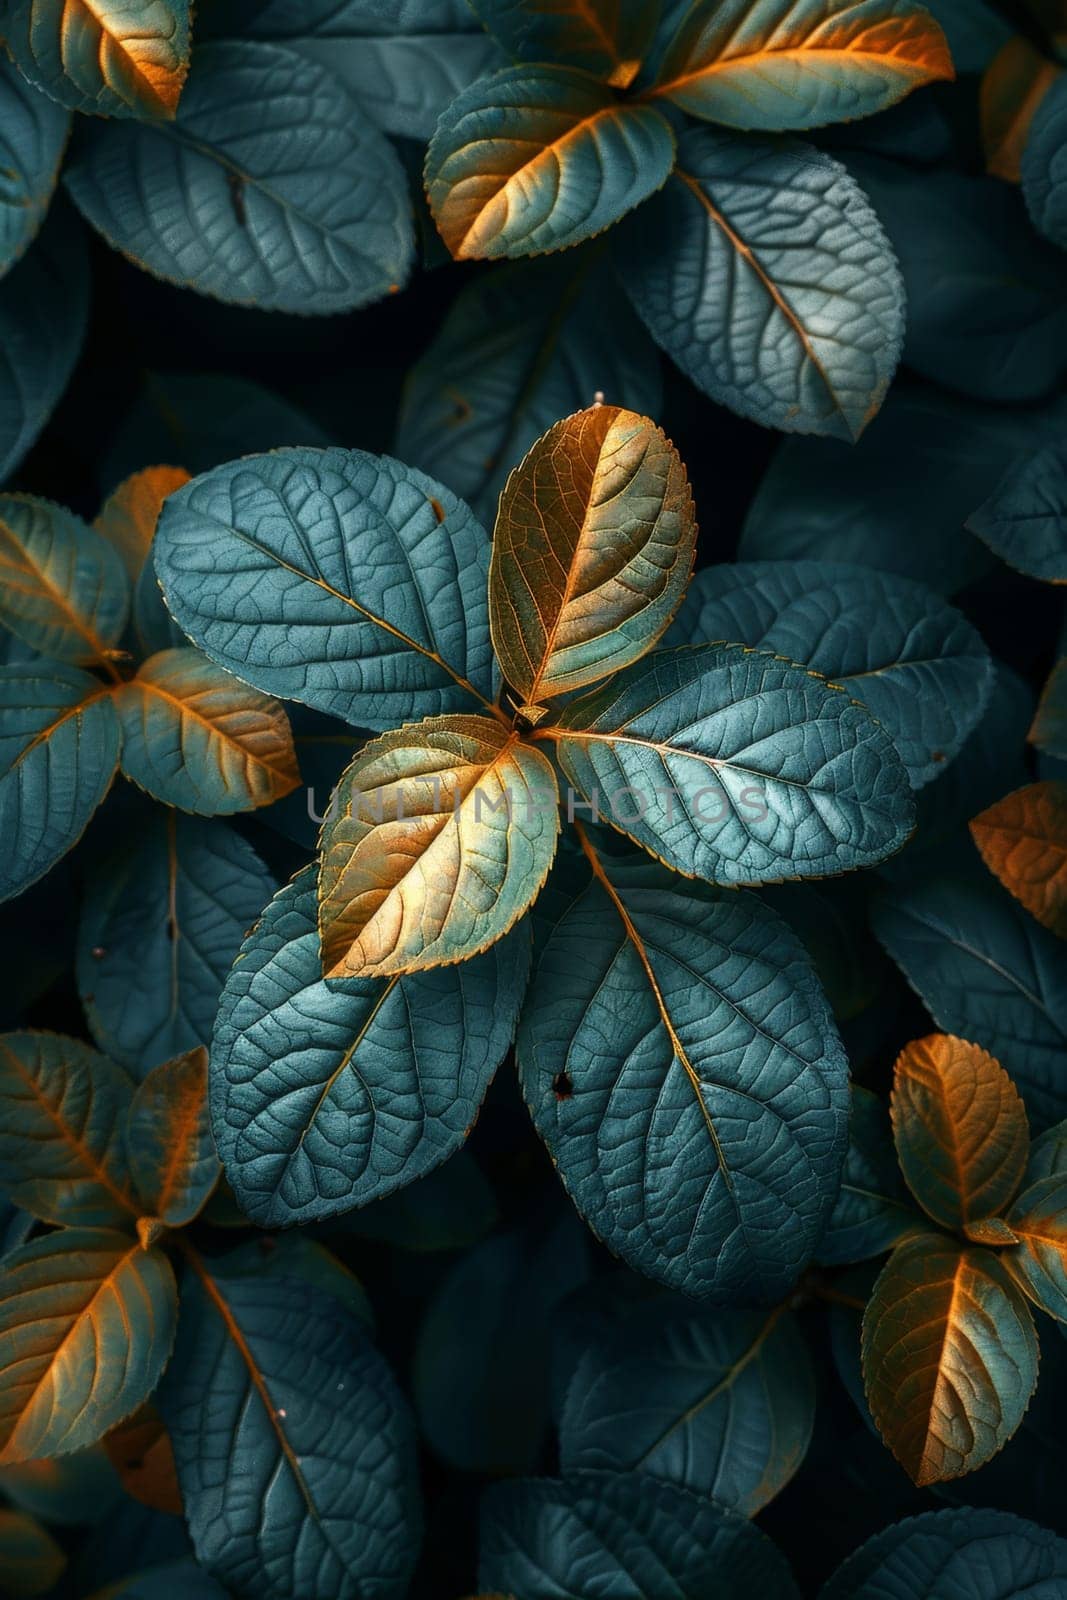 Green Leaf background, Environmental background and Desktop wallpaper.